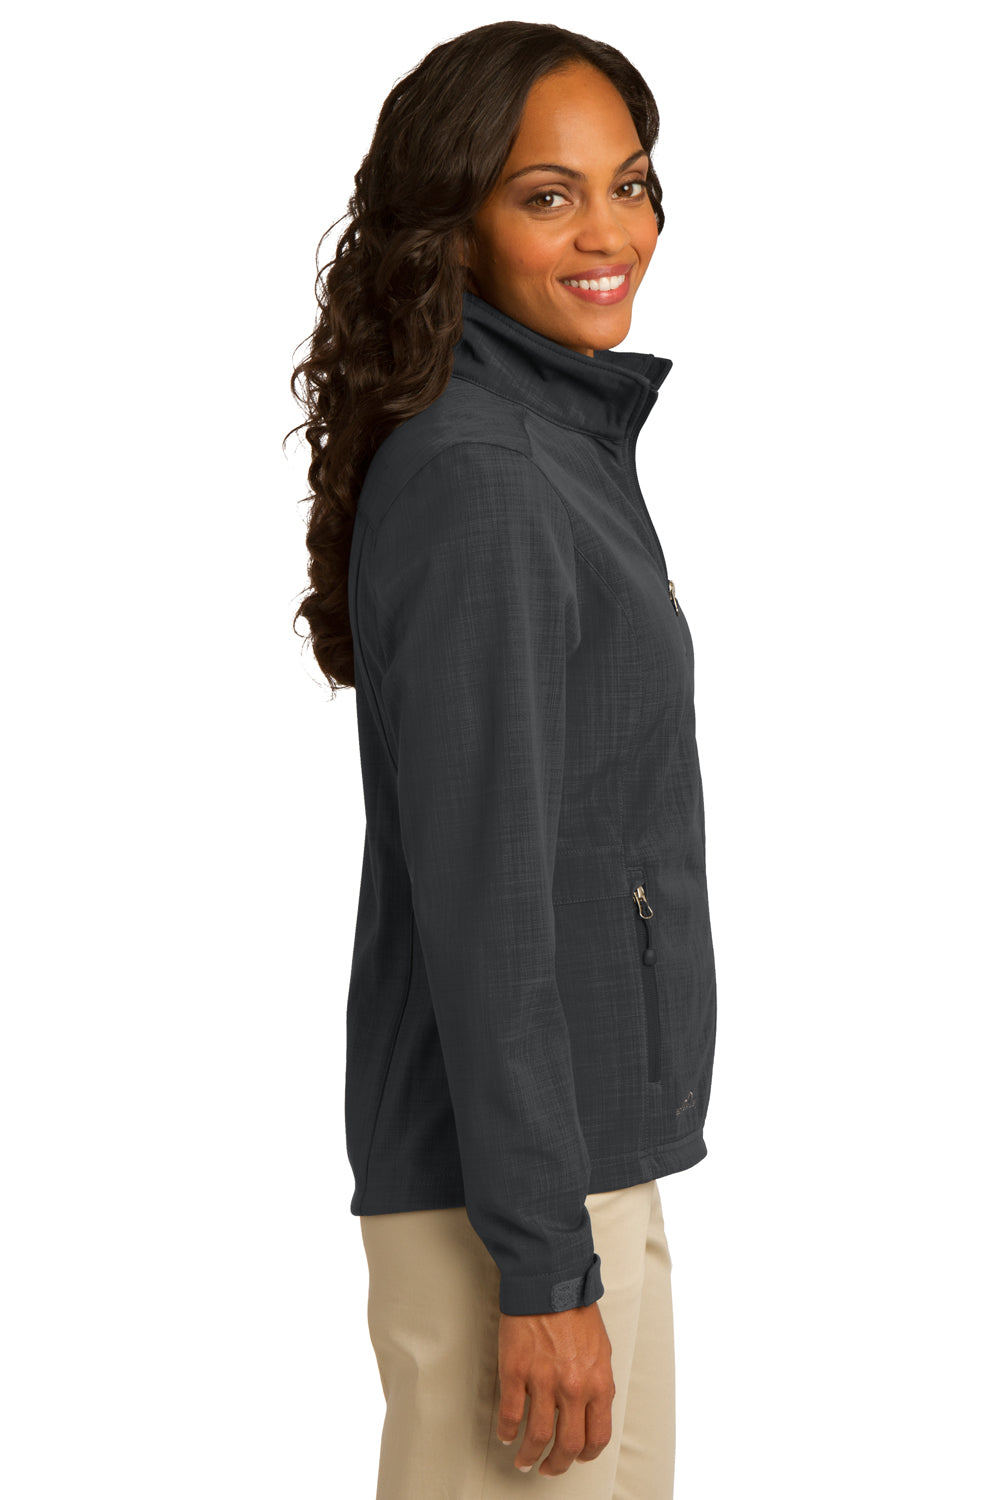 Eddie Bauer EB533 Womens Shaded Crosshatch Wind & Water Resistant Full Zip Jacket Grey Model Side